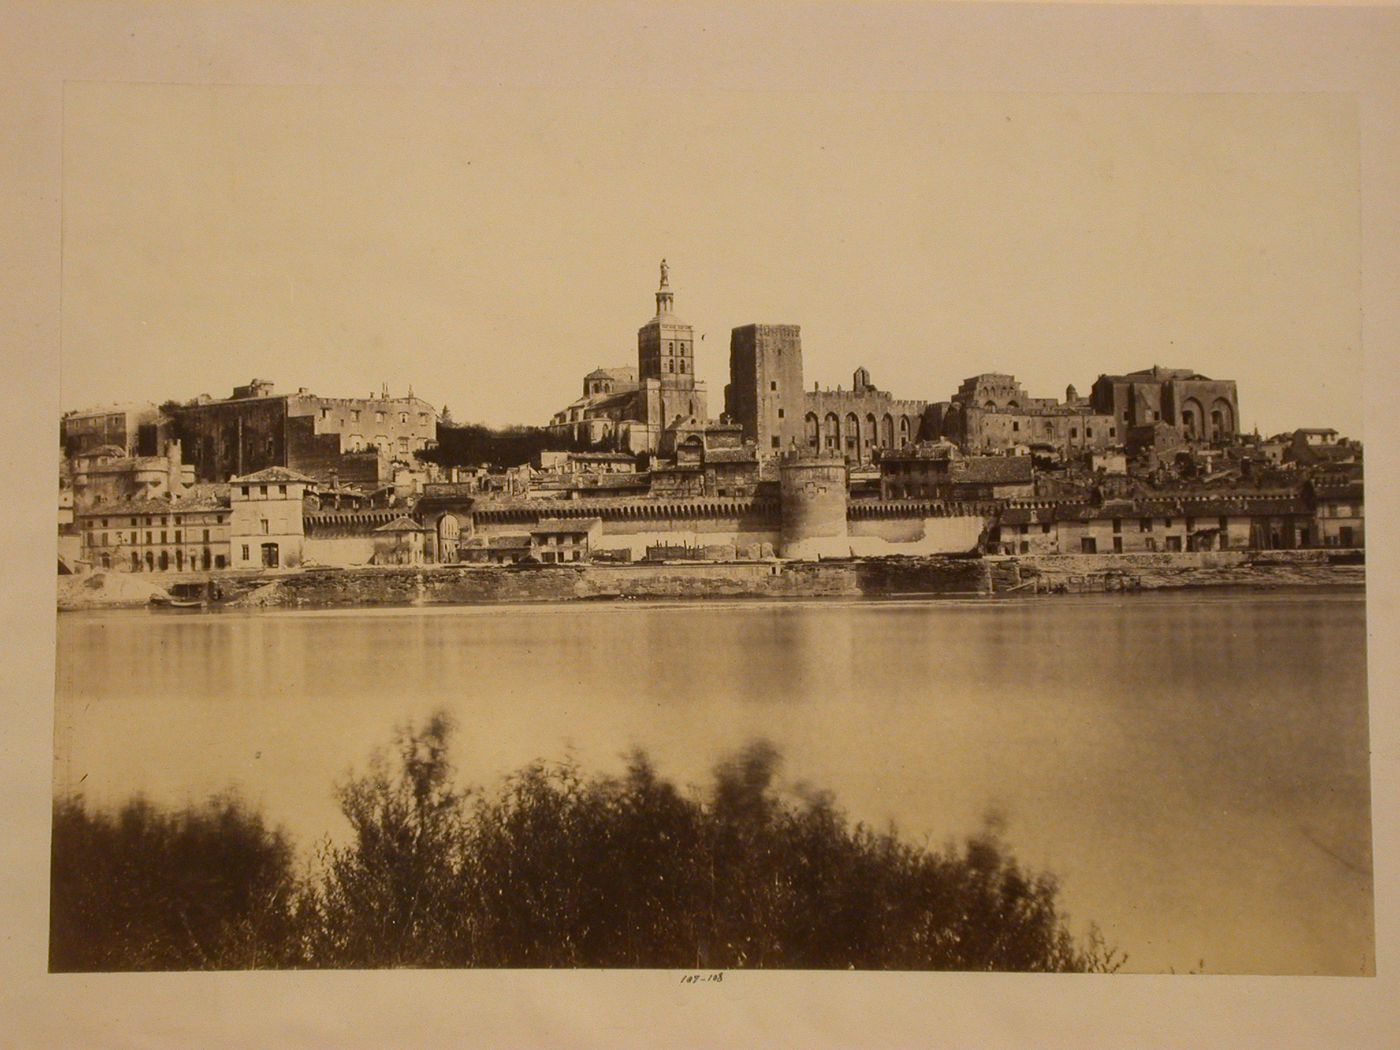 View across a bay showing coastal fortifications, Notre-Dame des Doms and the Palais des Papes, Avignon, France